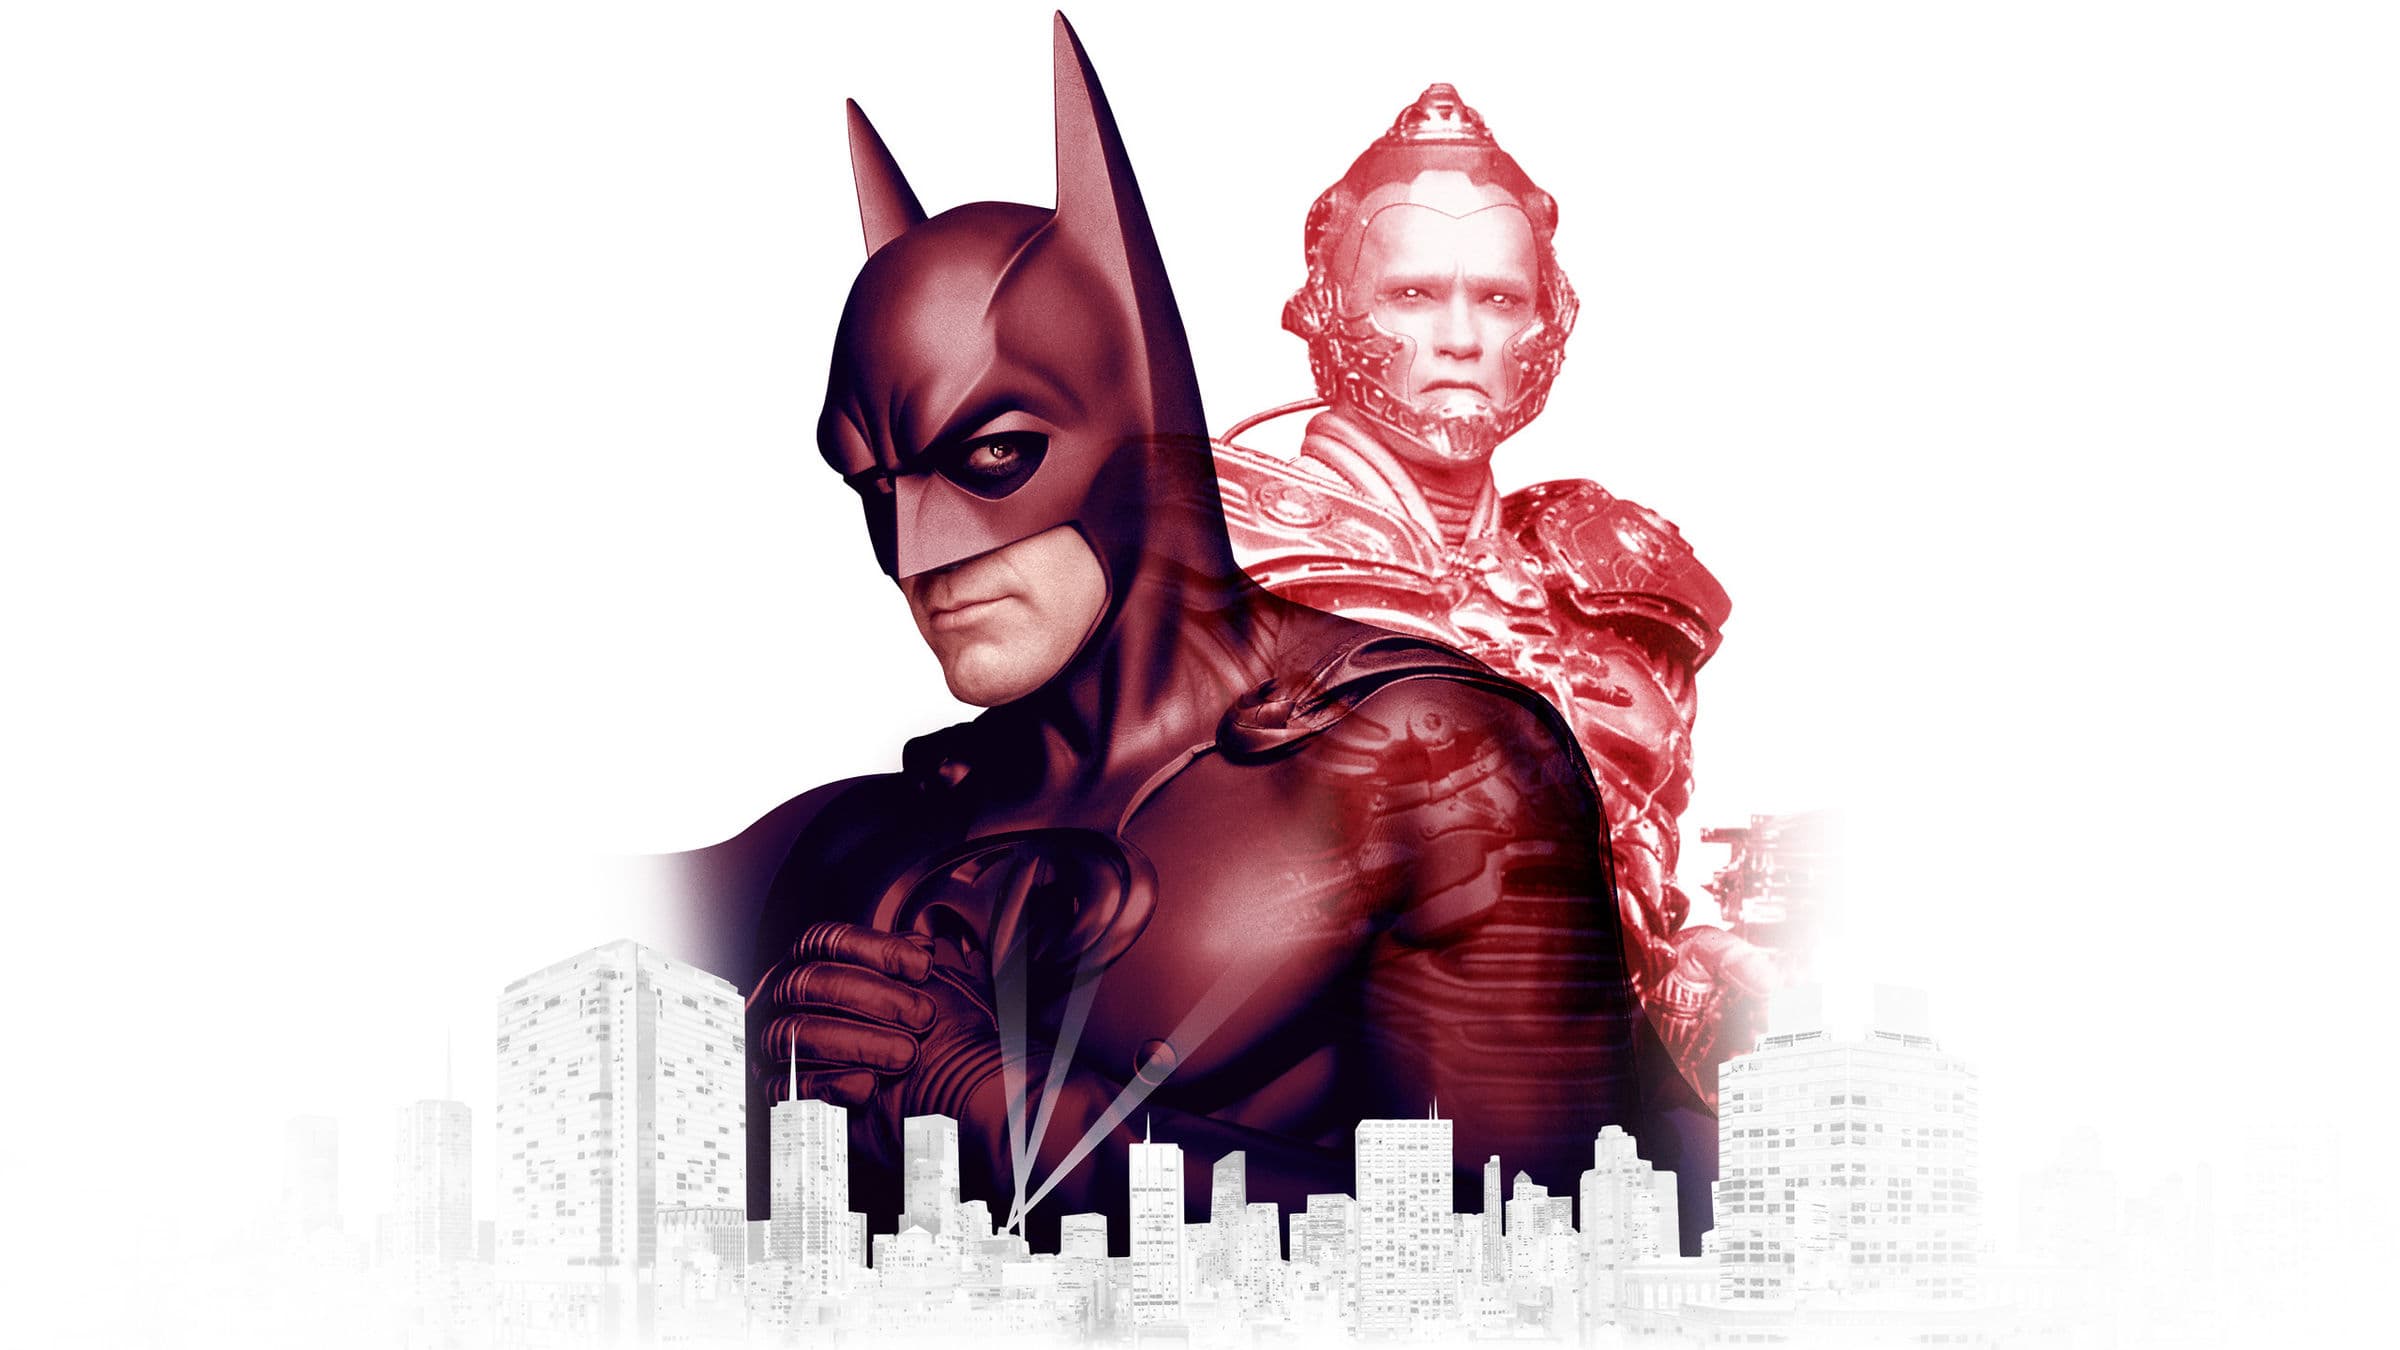 Movie Batman & Robin HD Wallpaper | Background Image